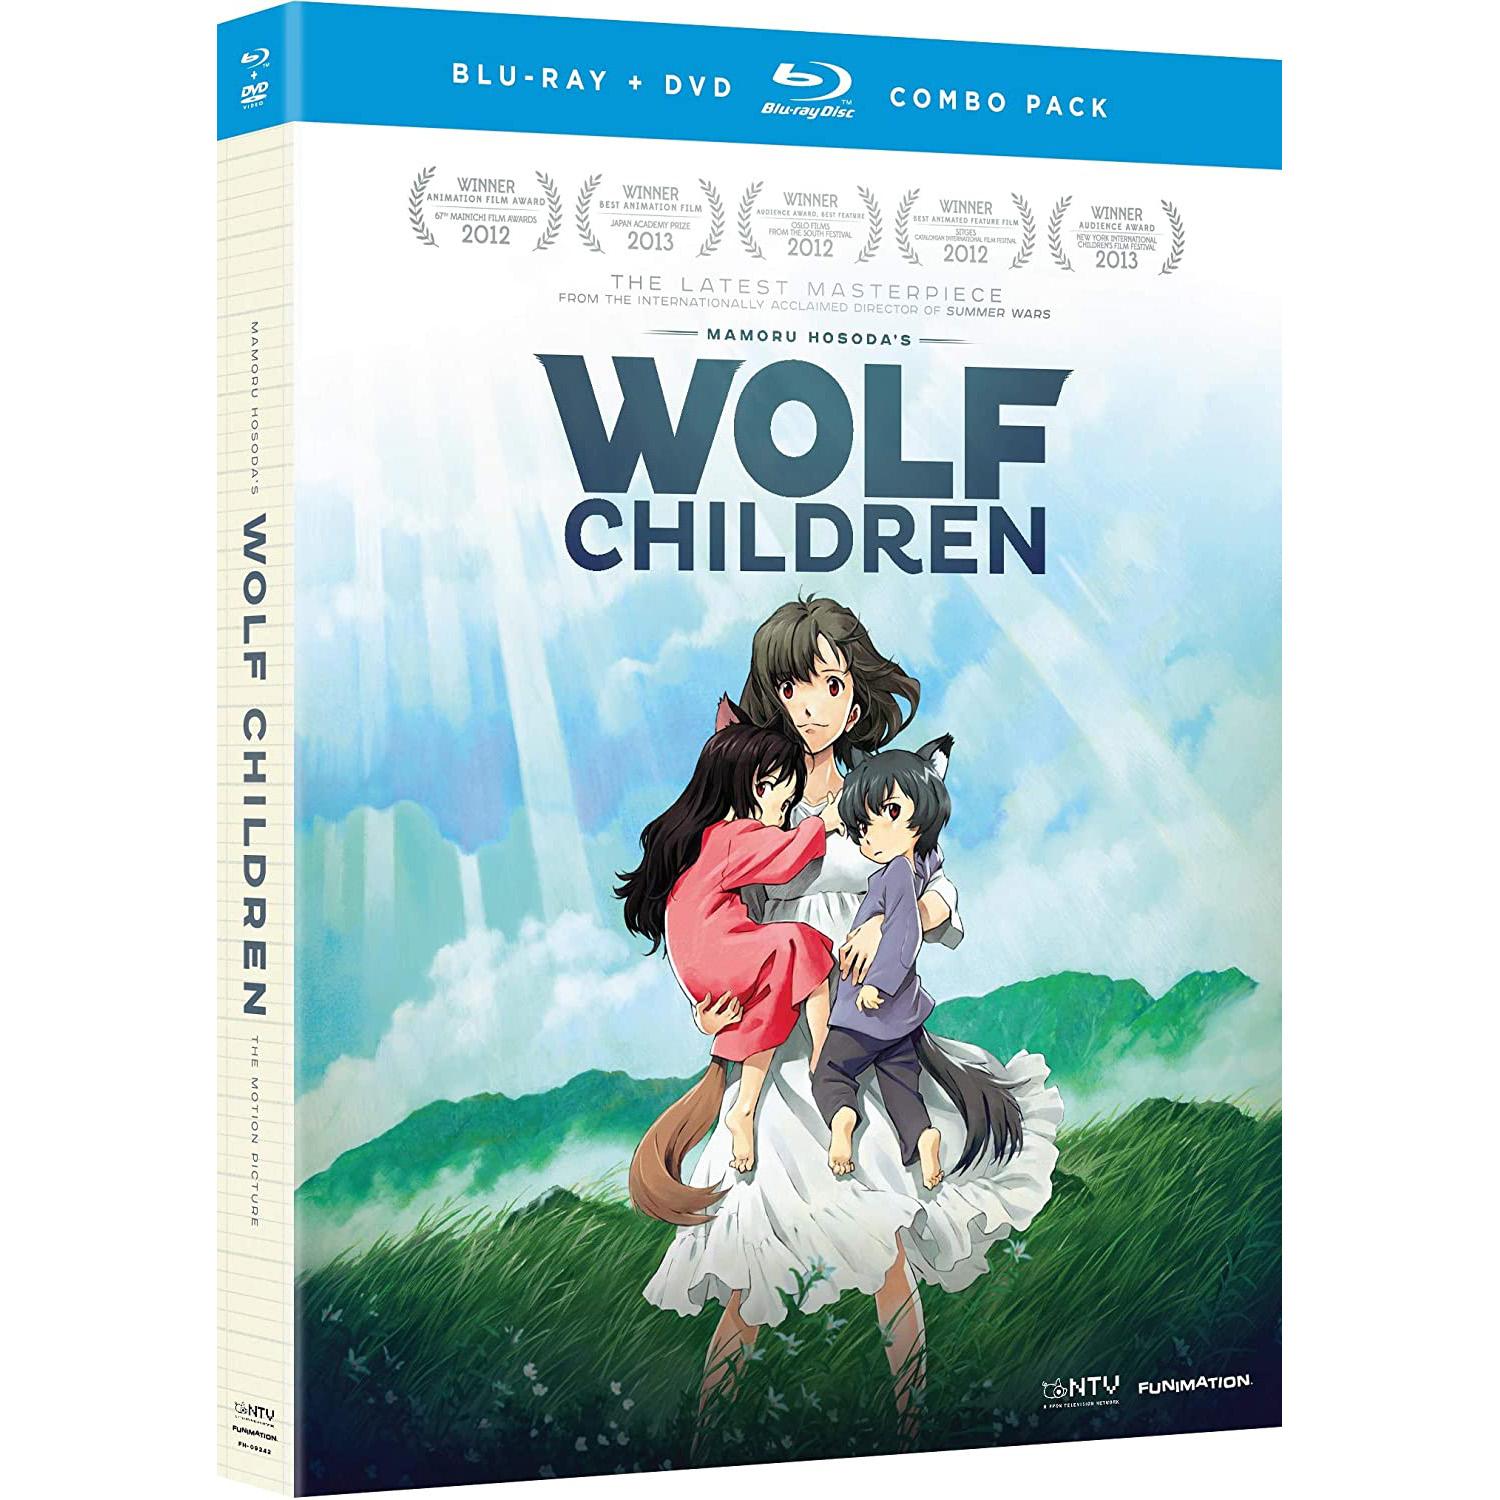 Wolf Children Blu-ray + DVD for $11.99